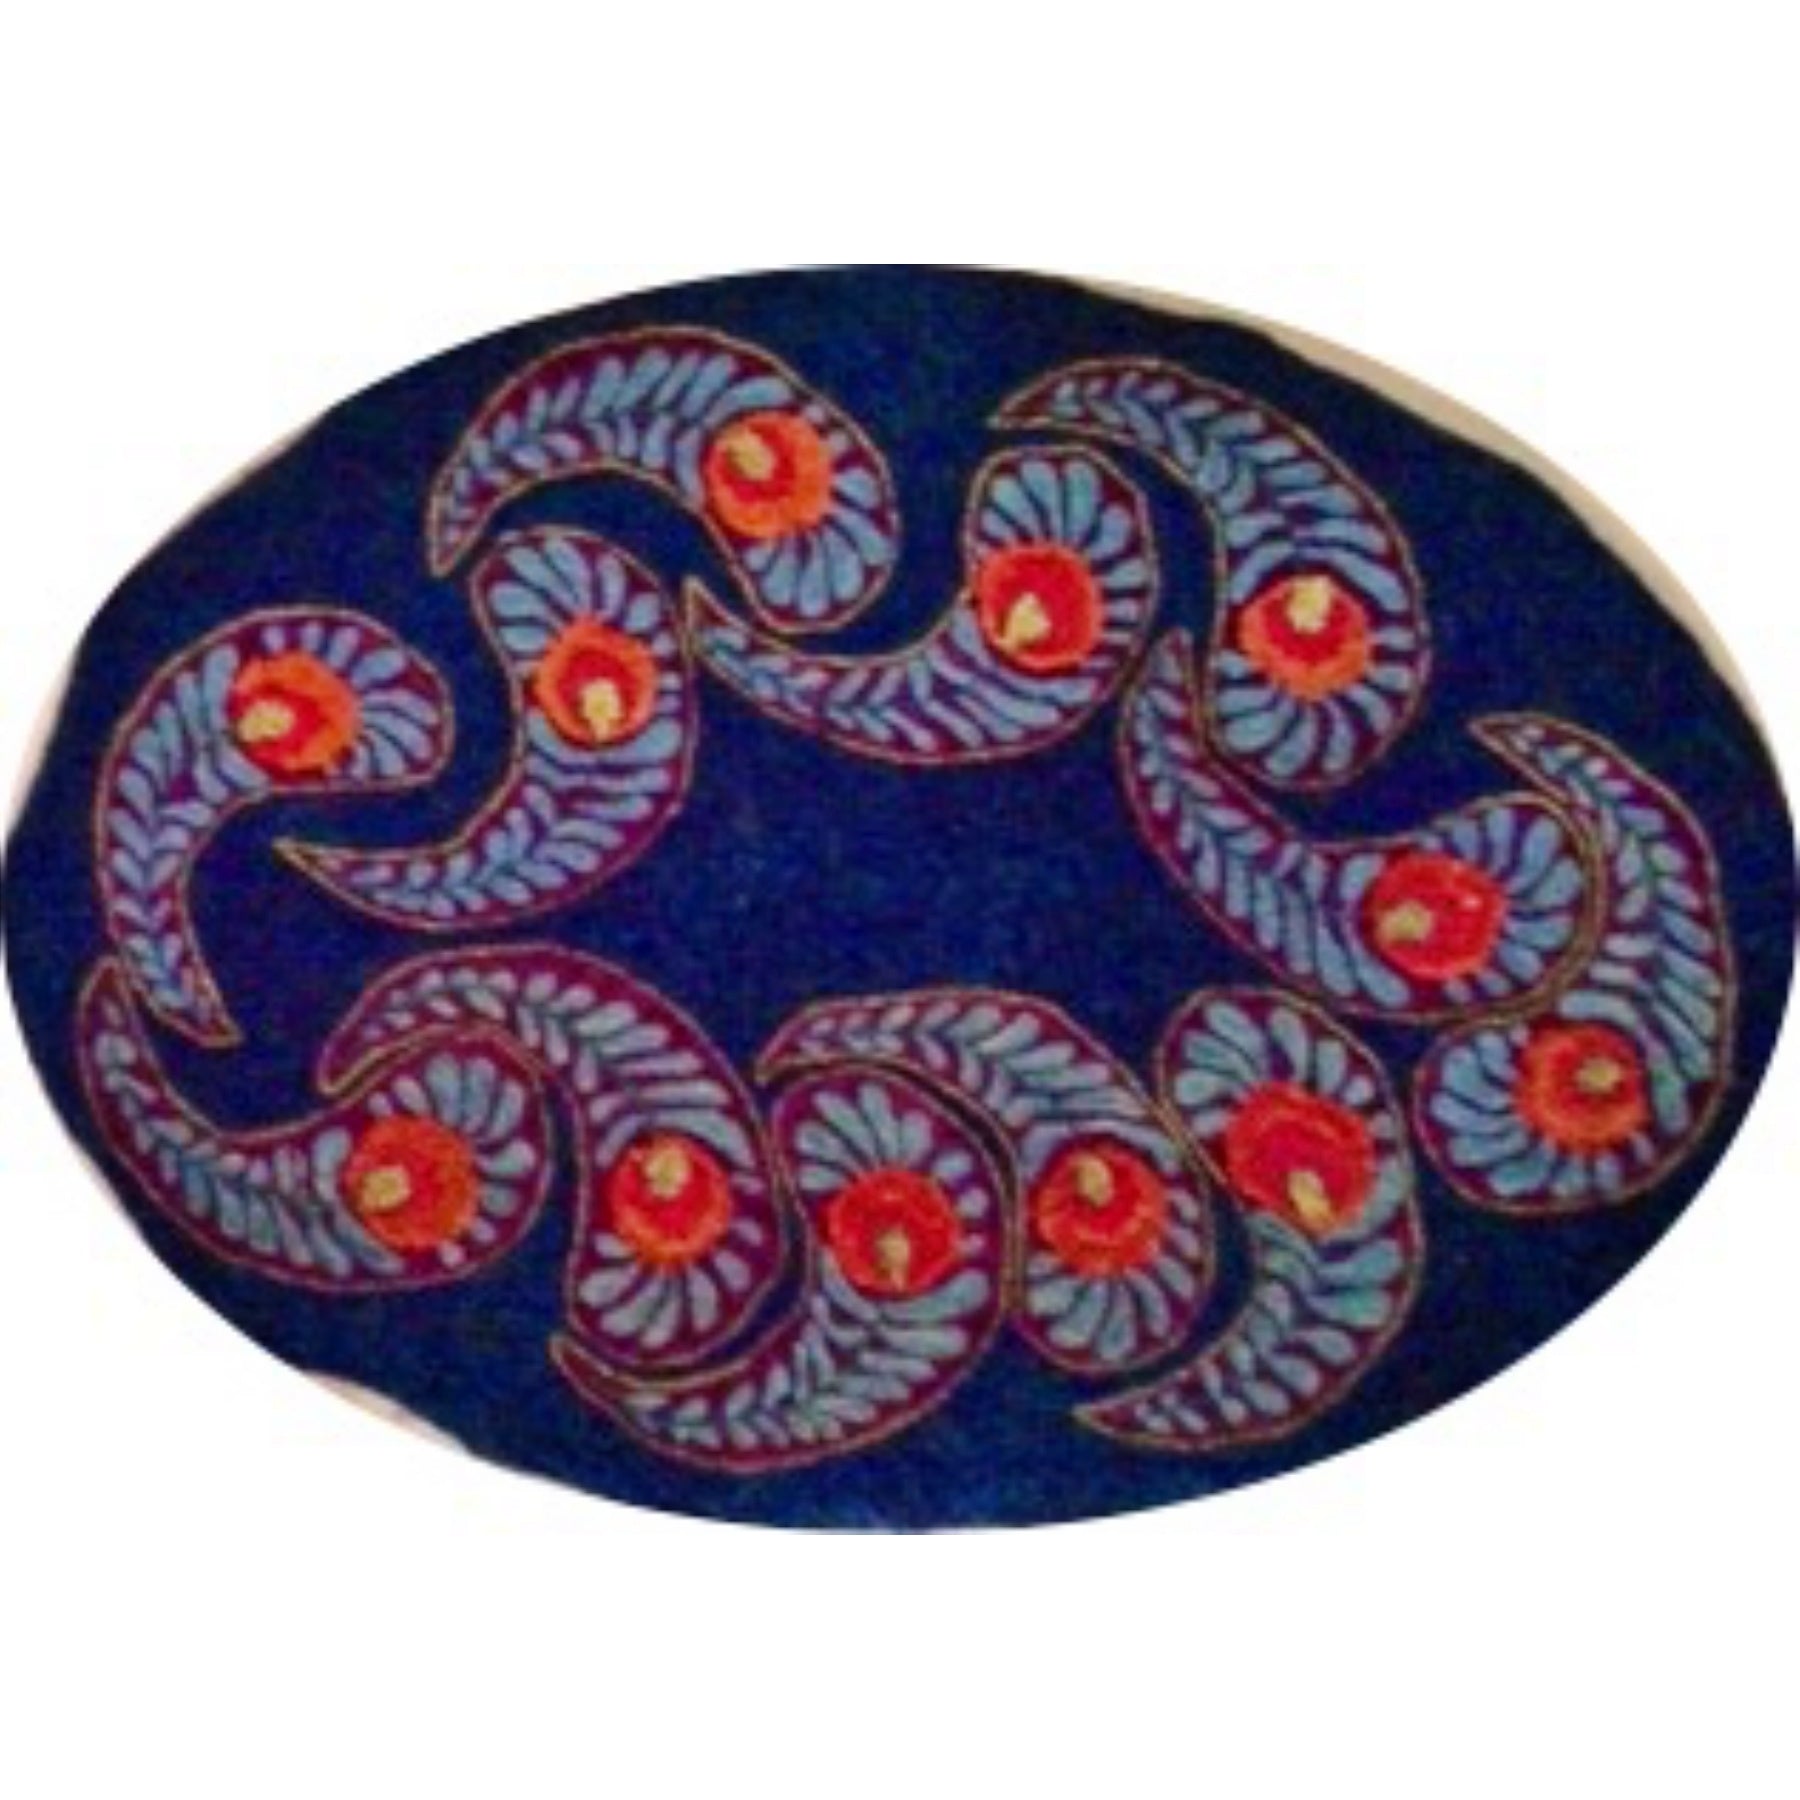 Peacock Paisley, rug hooked by Nancy Jewett